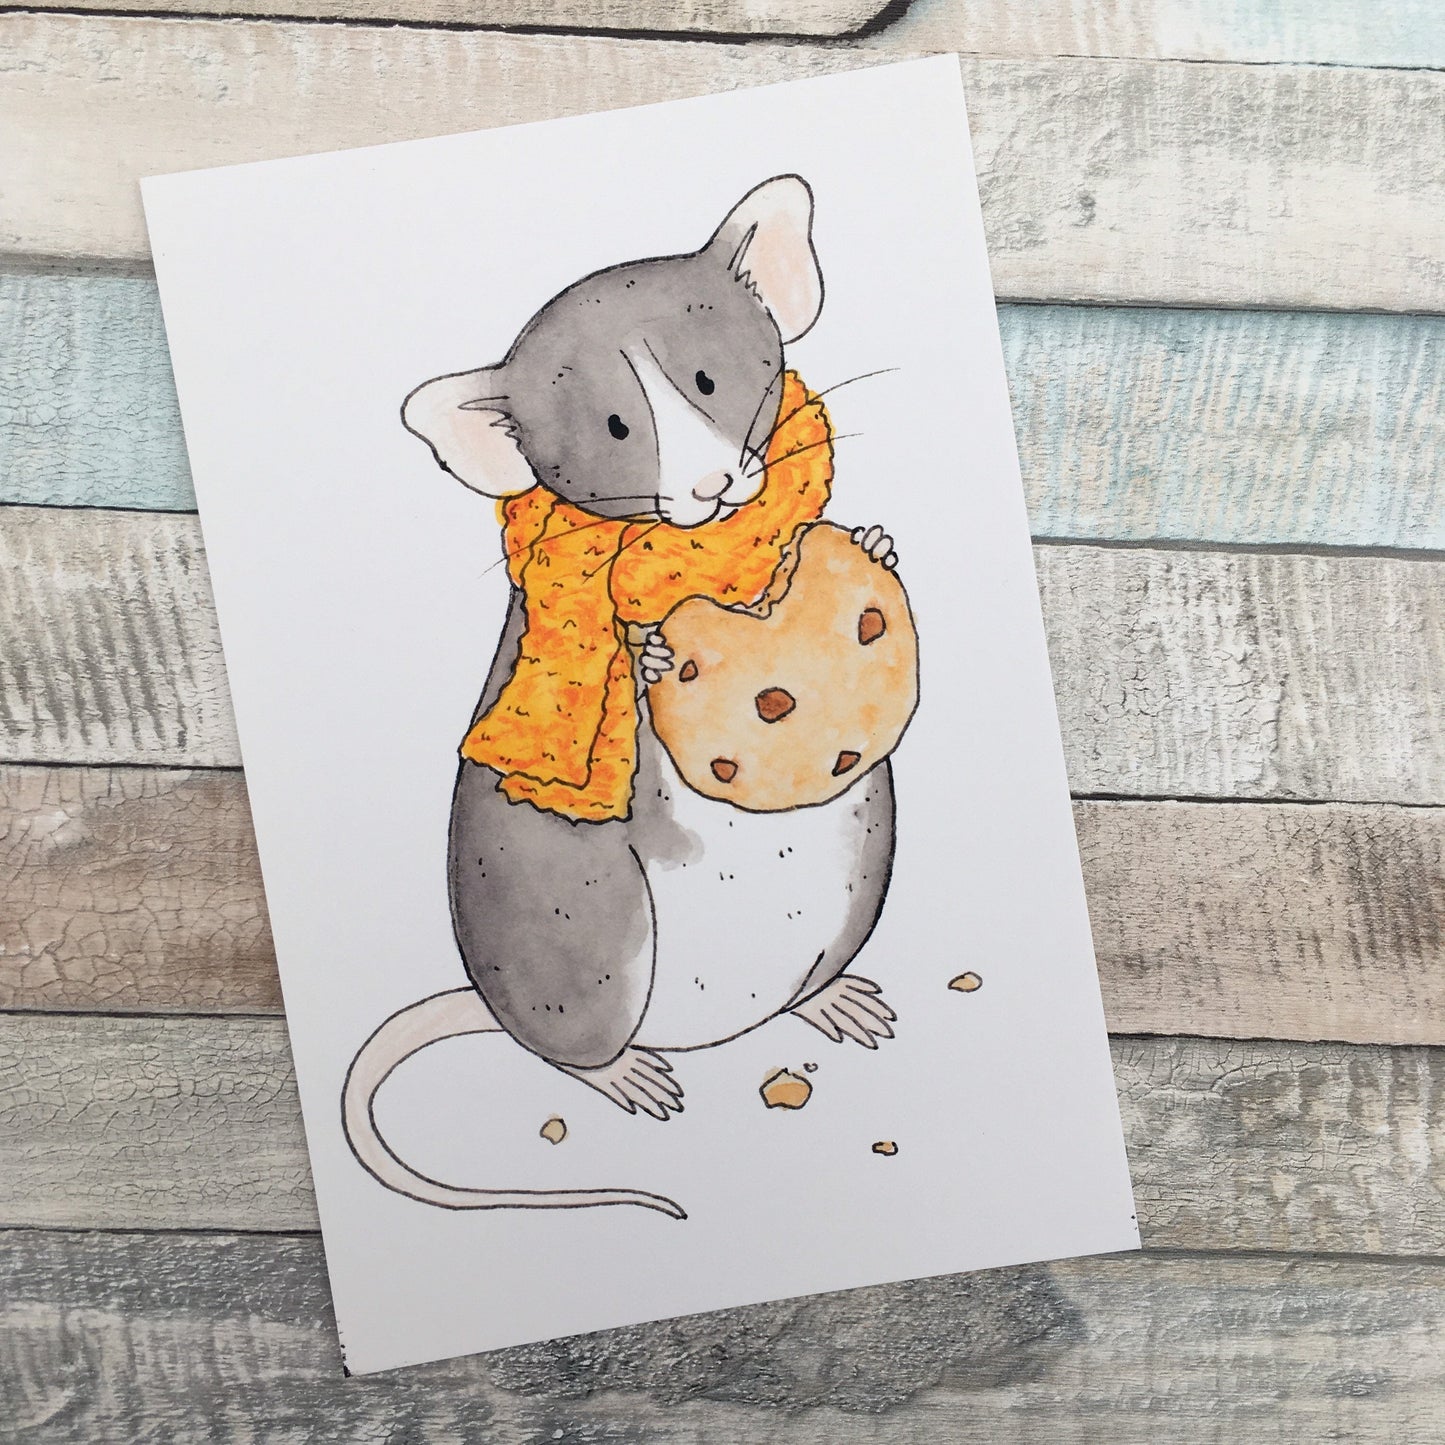 Cookie the Rat Art Print - A5 6x4 Art Print Pet Rat Fancy Rat Digital Painting Art Print